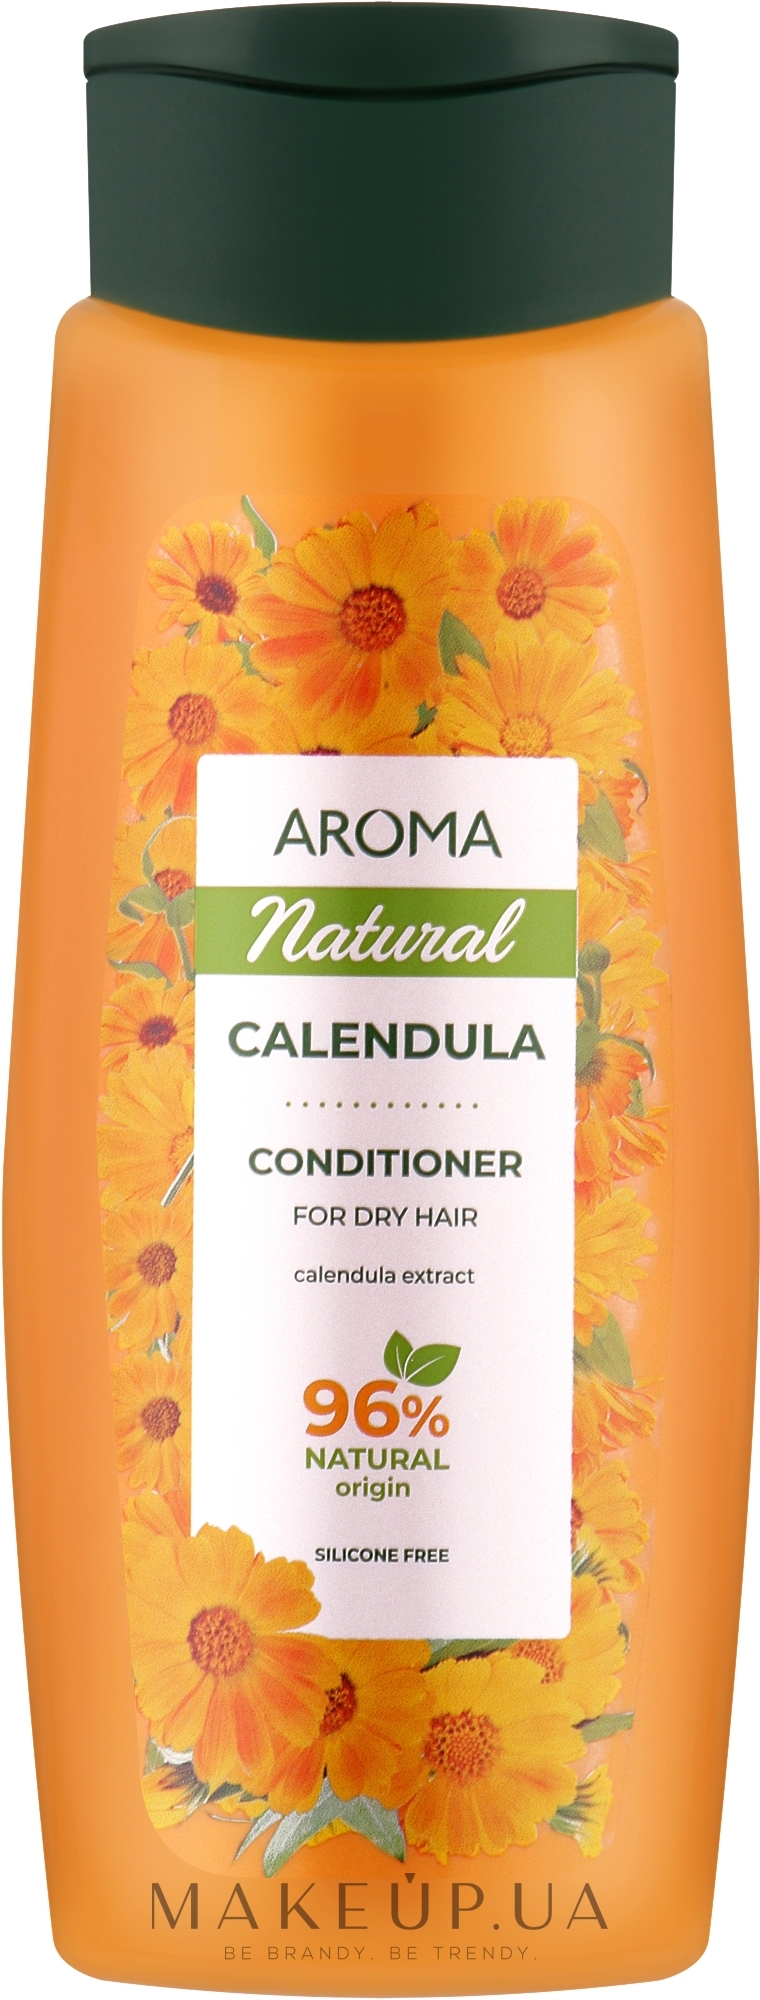 Кондиционер с календулой для сухих волос - Aroma Natural Conditioner, Calendula For Dry Hair — фото 400ml